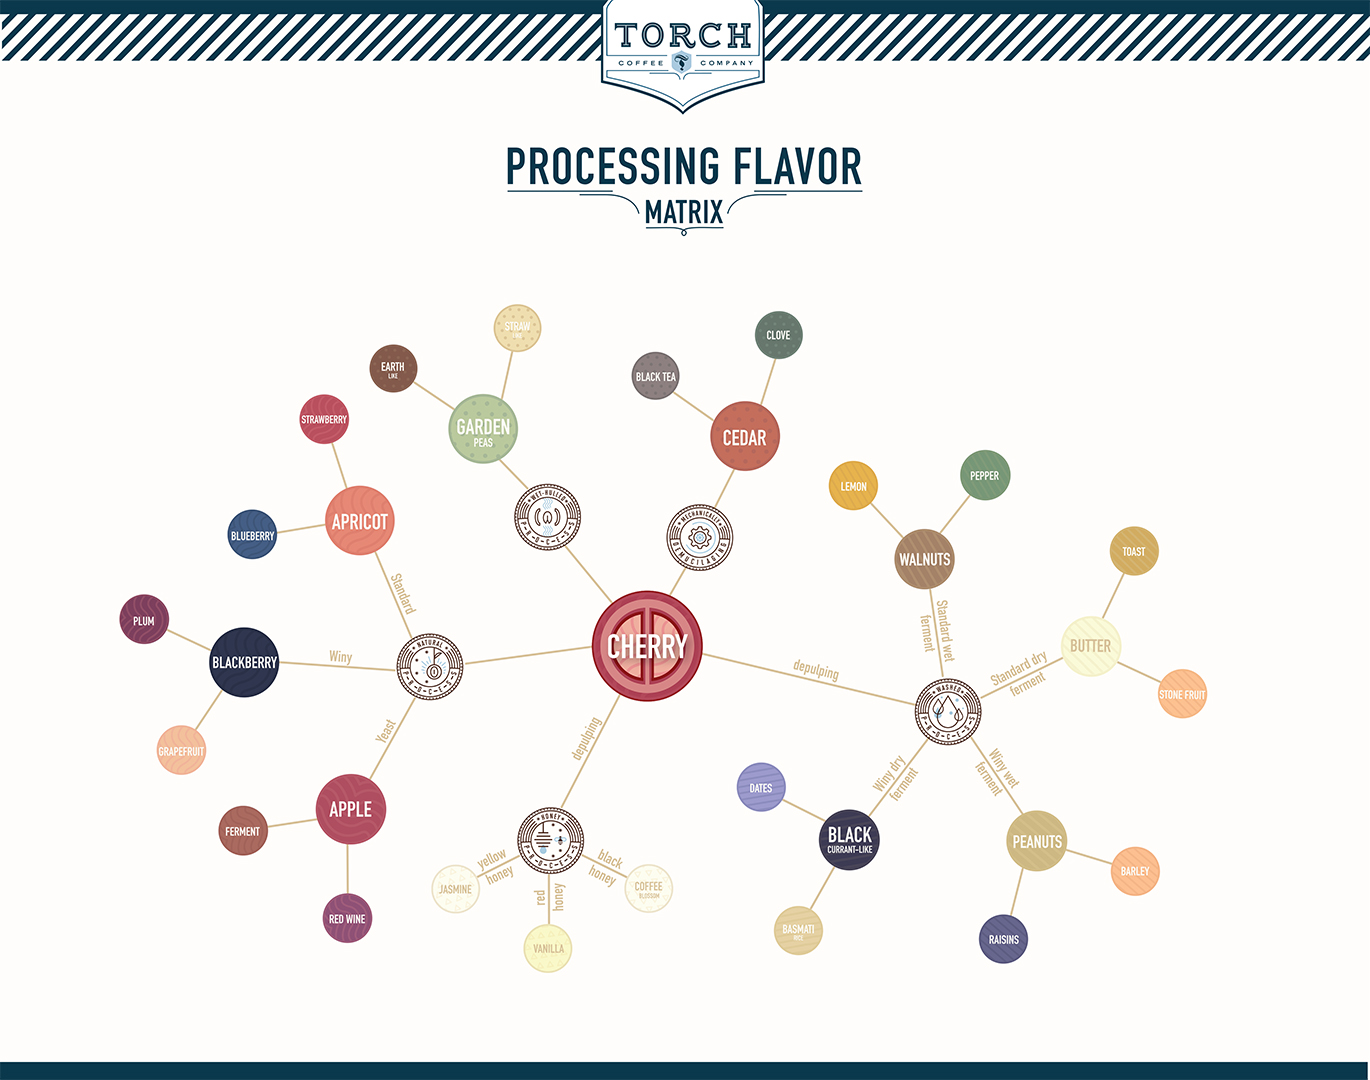 Torch Processing Flavor Matrix.jpg